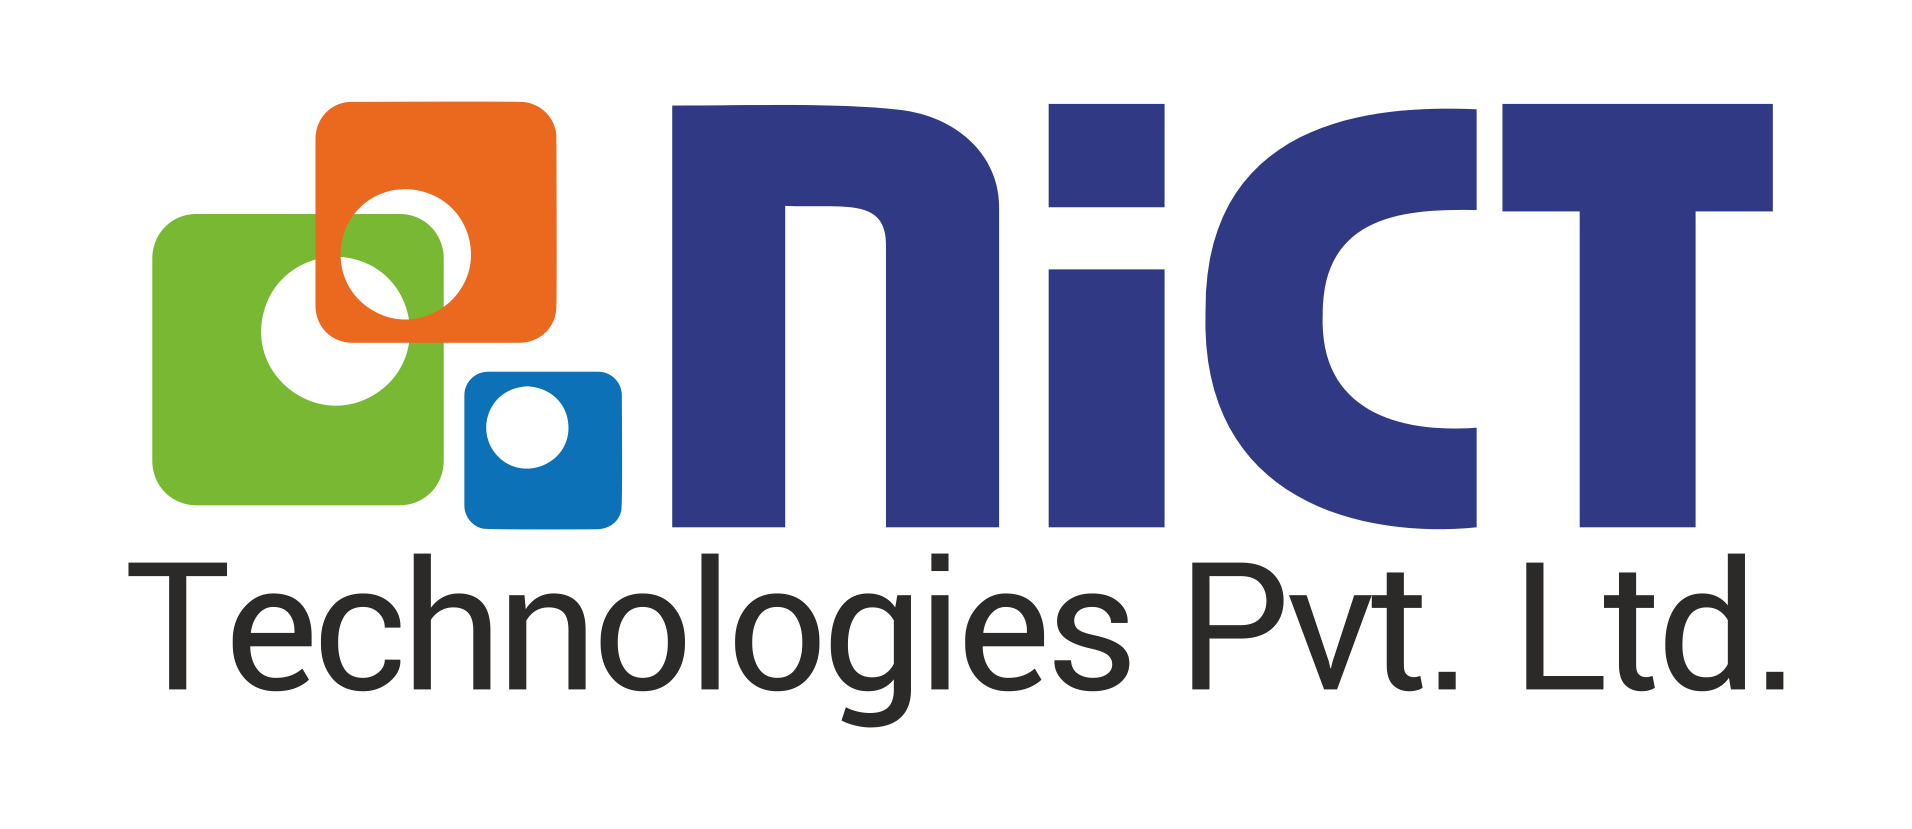 Brandfetch | NITCO Inc Logos & Brand Assets